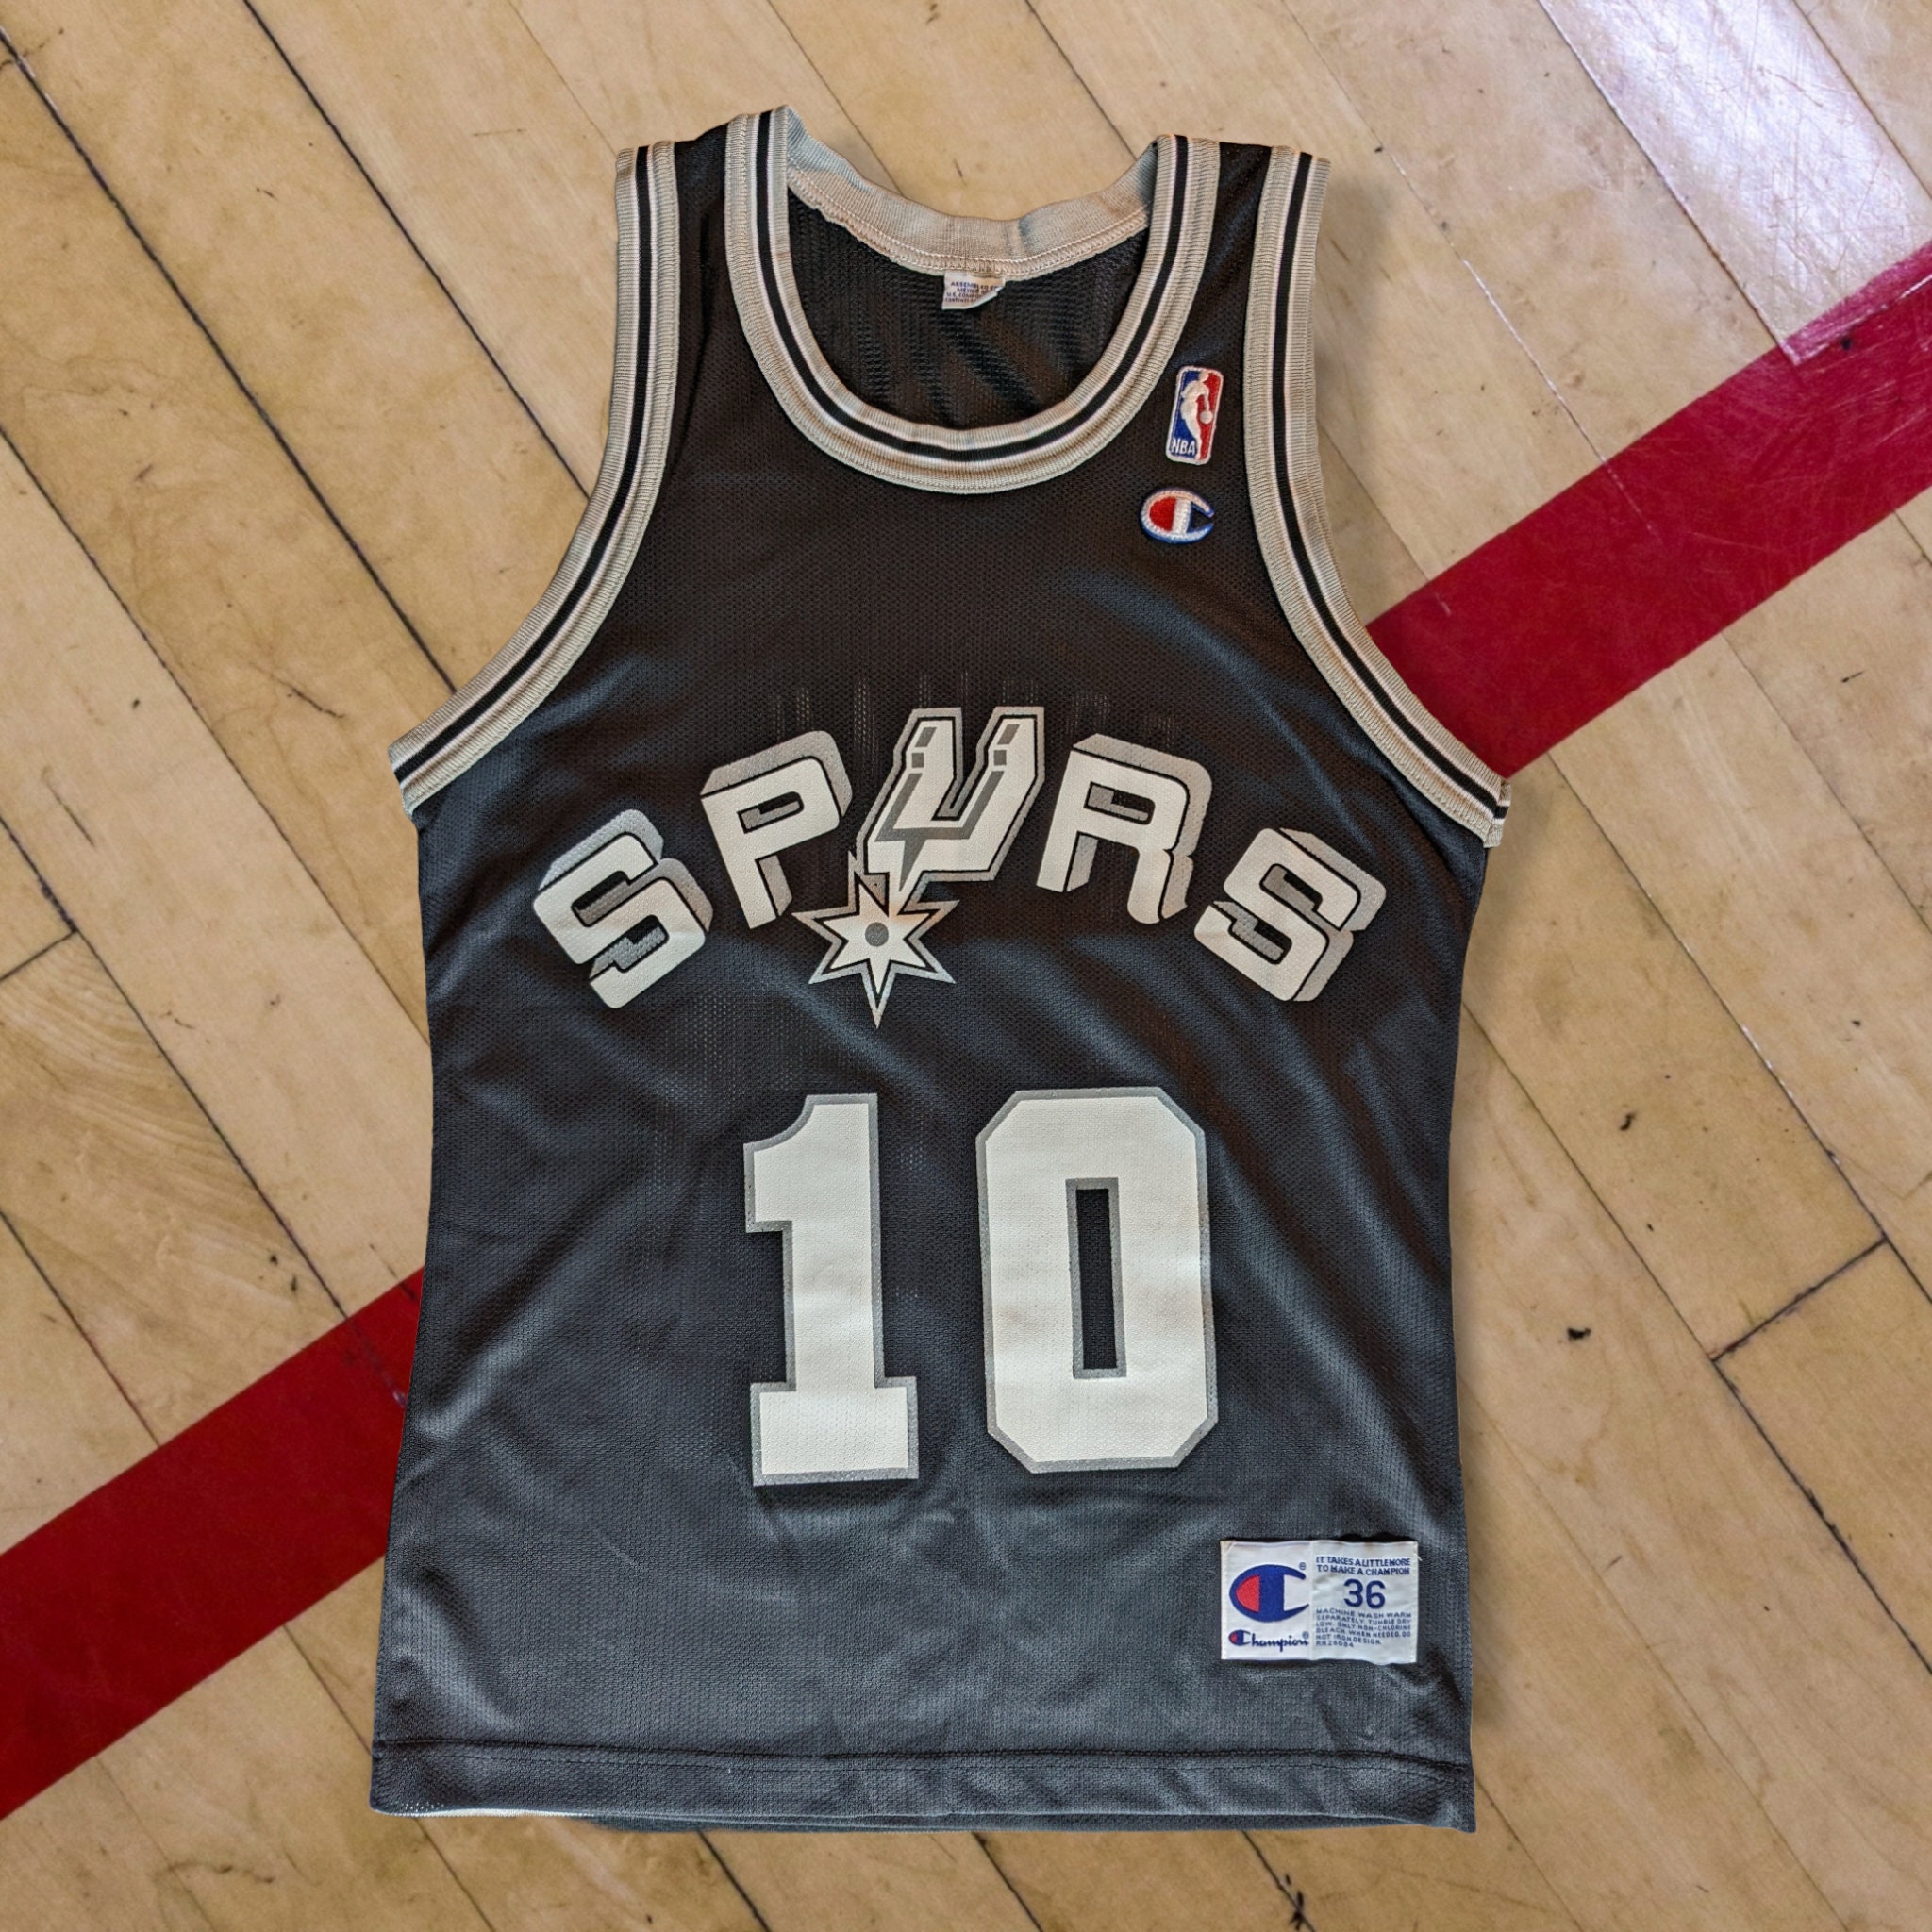 Adidas NBA Jersey San Antonio Spurs Kawhi Leonard Grey sz XL